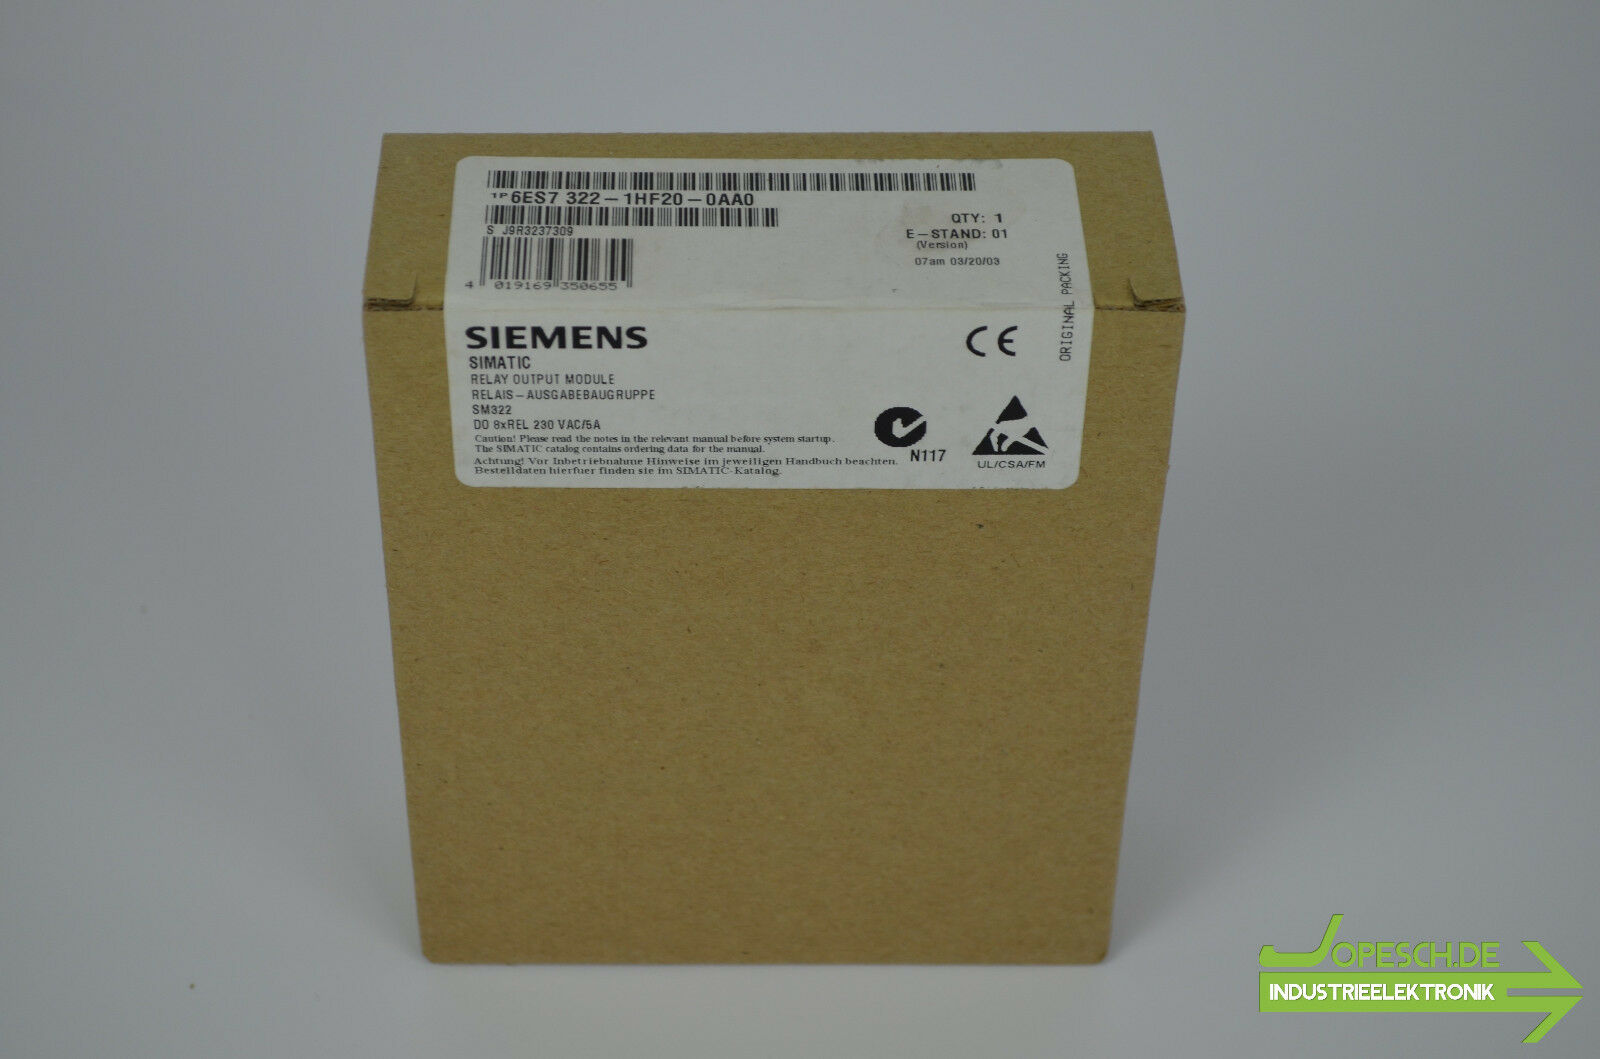 Siemens simatic S7-300 SM322 6ES7 322-1HF20-0AA0 ( 6ES7322-1HF20-0AA0 ) E01